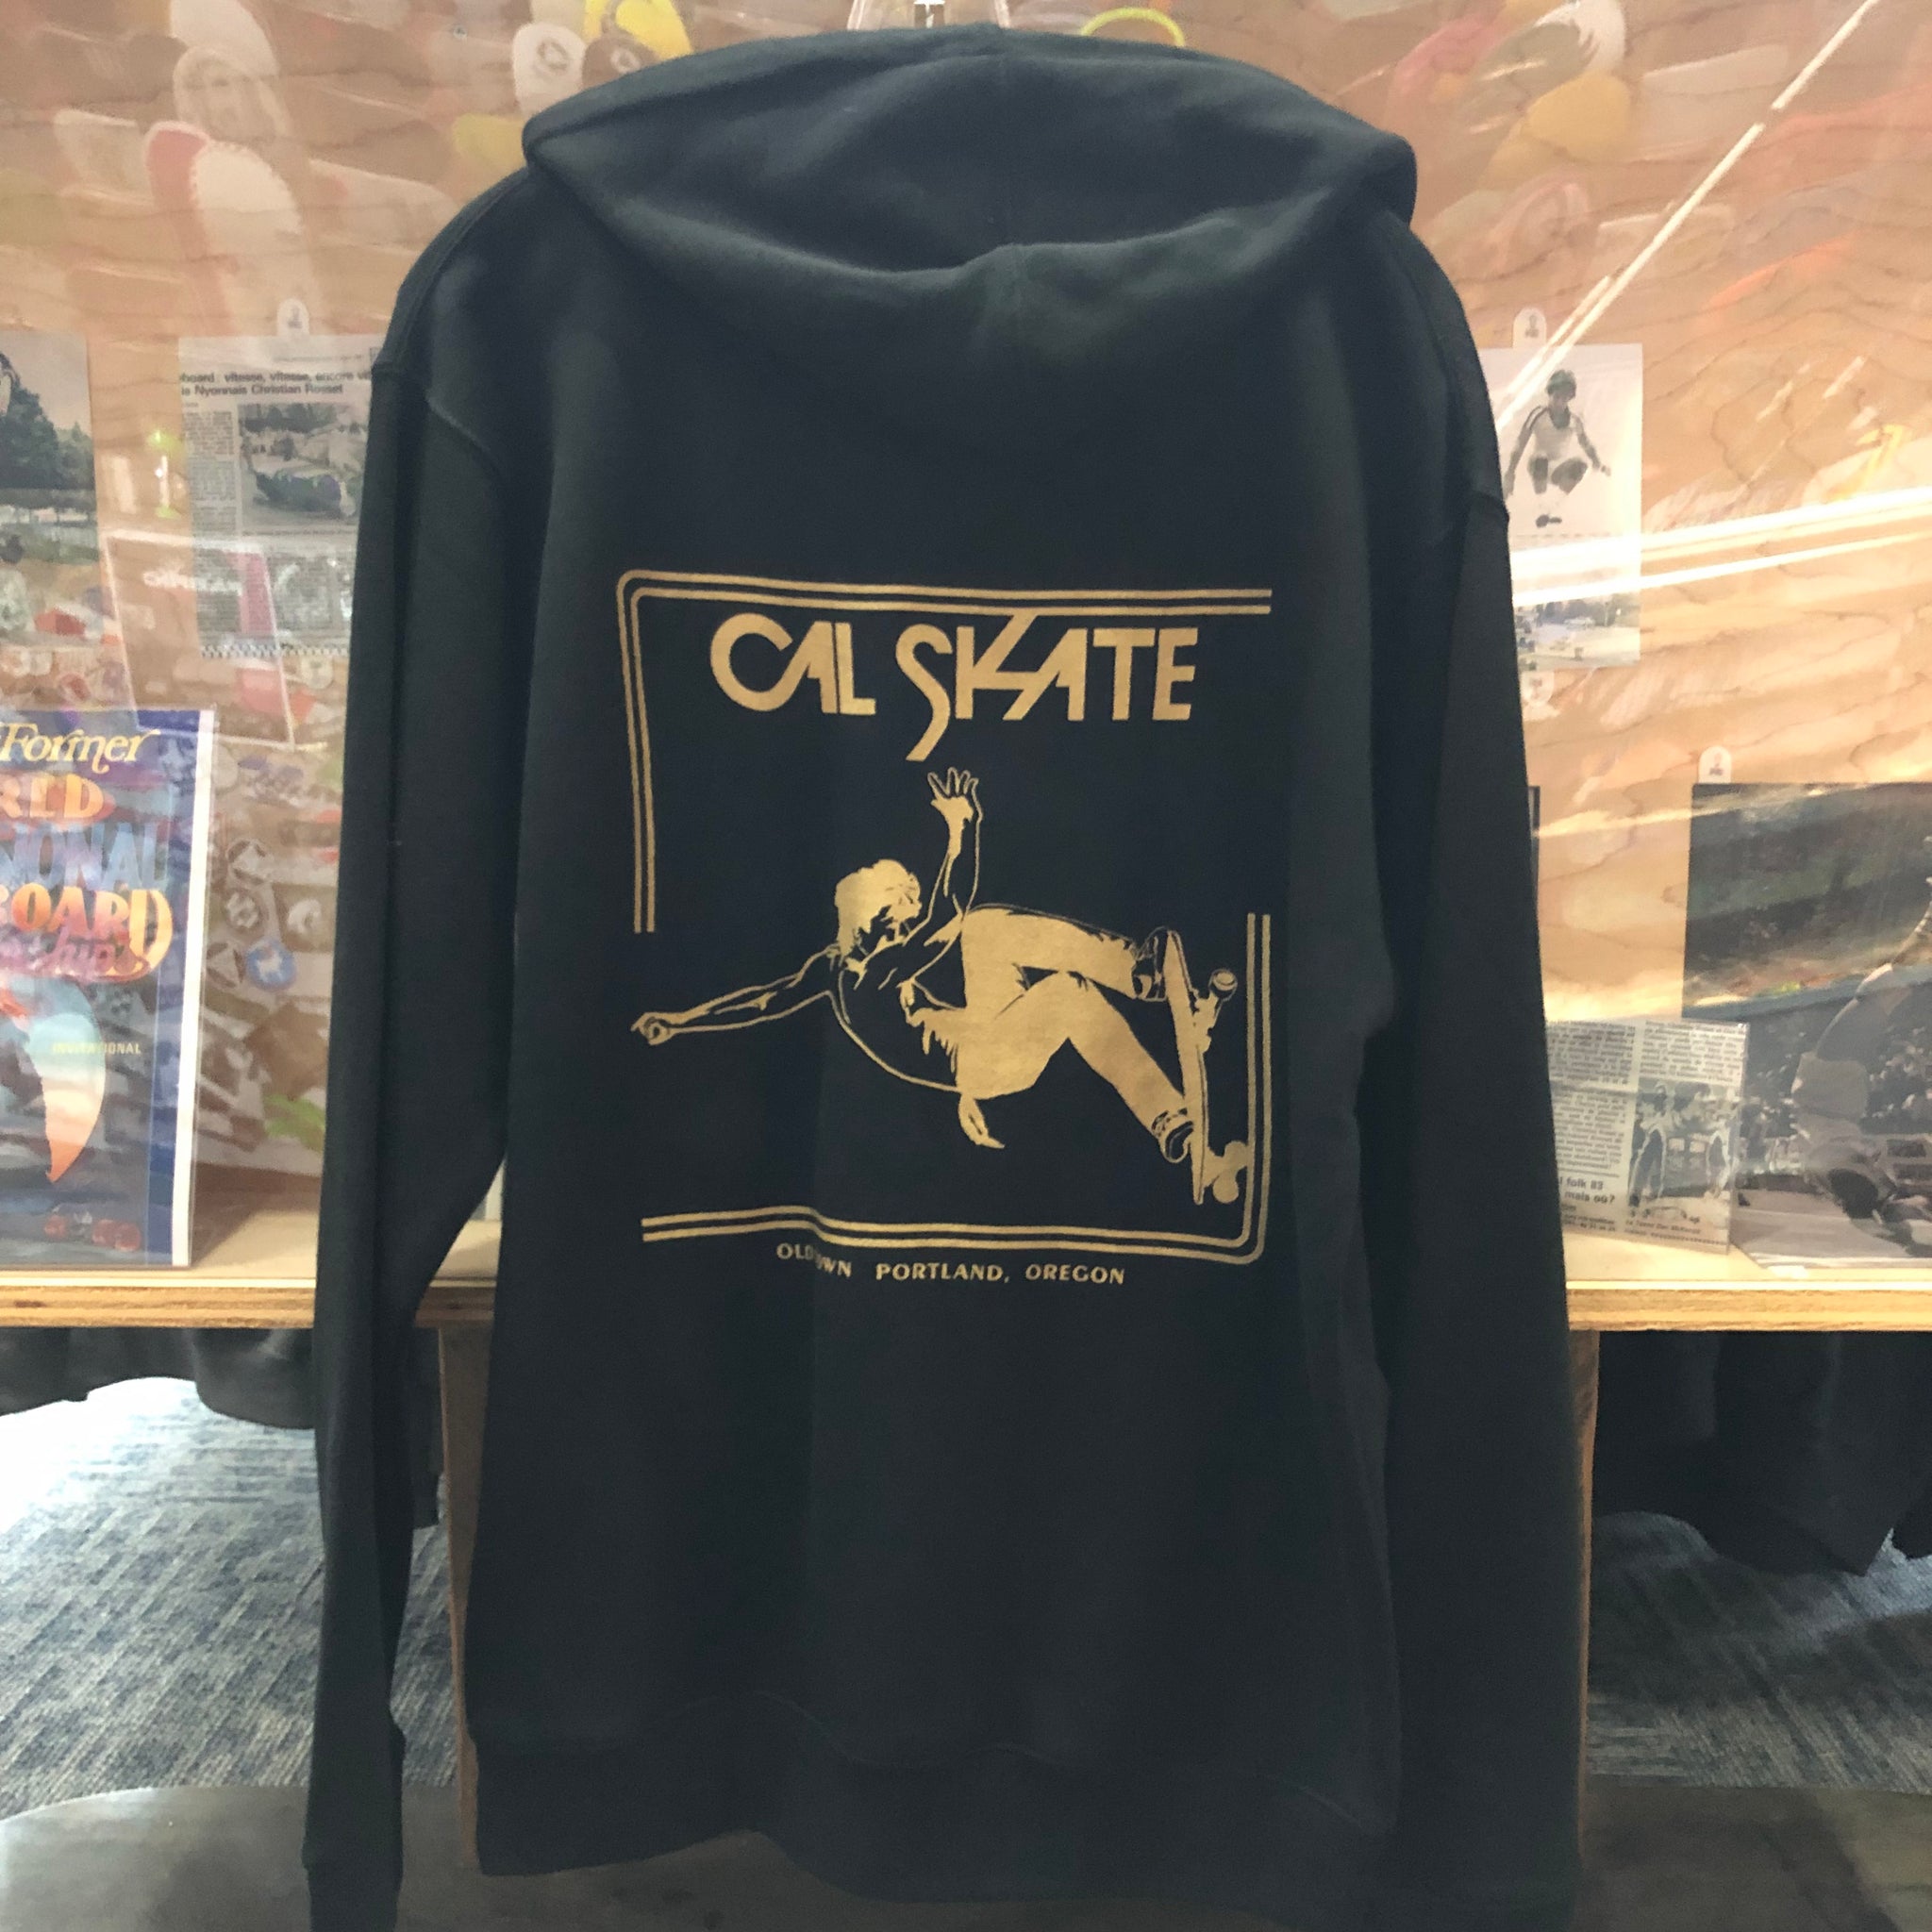 Cal Skate "Slasher-Hooded Sweatshirt" Black and Gold